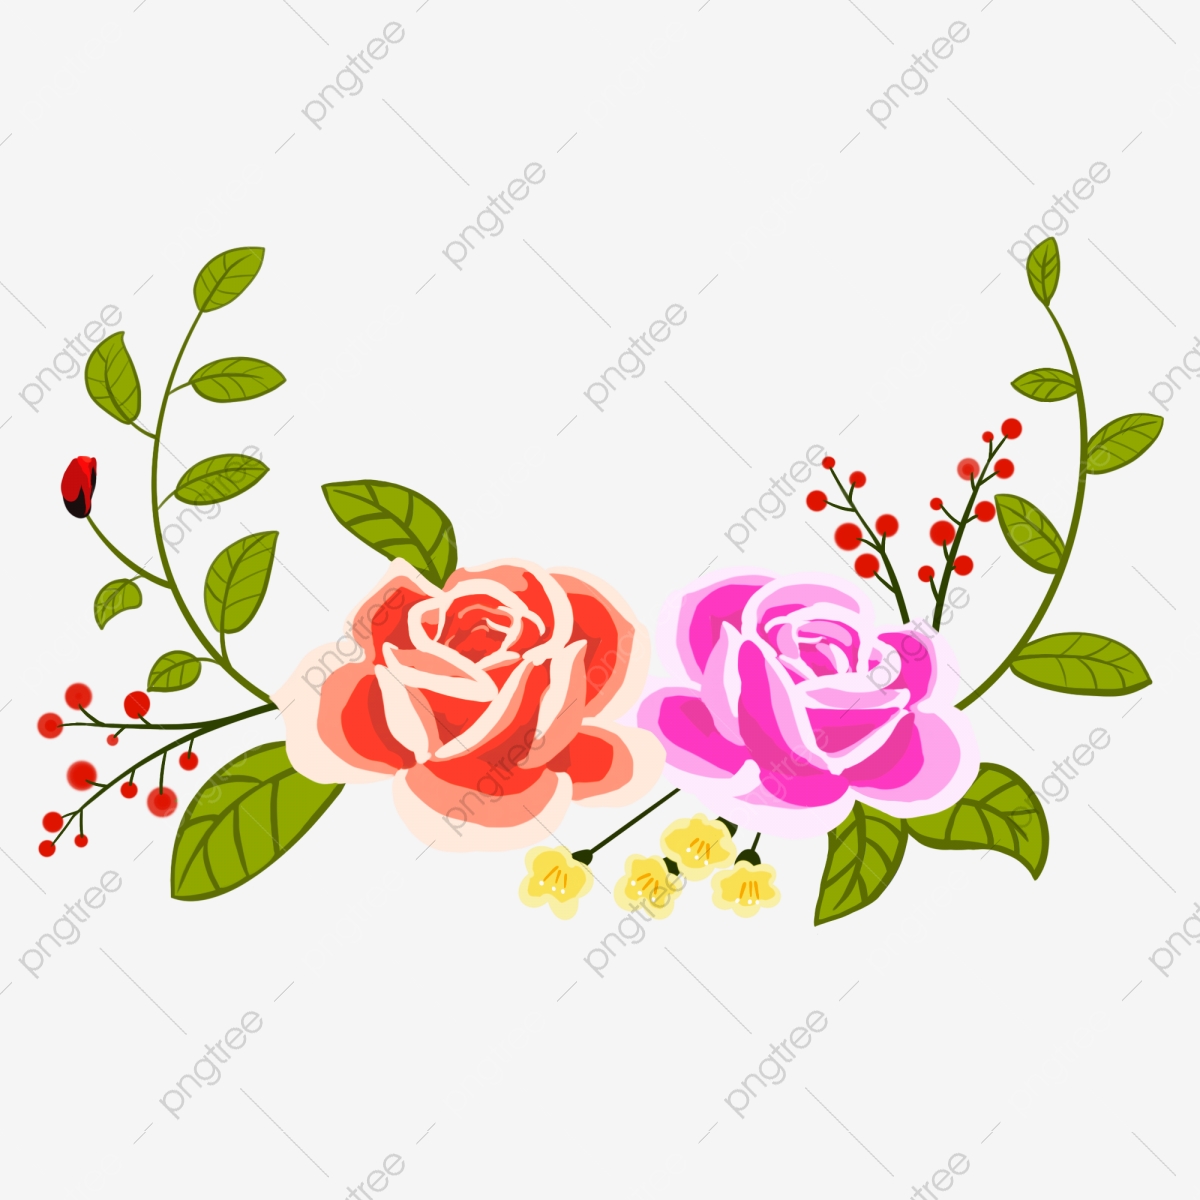 vines clipart pink rose